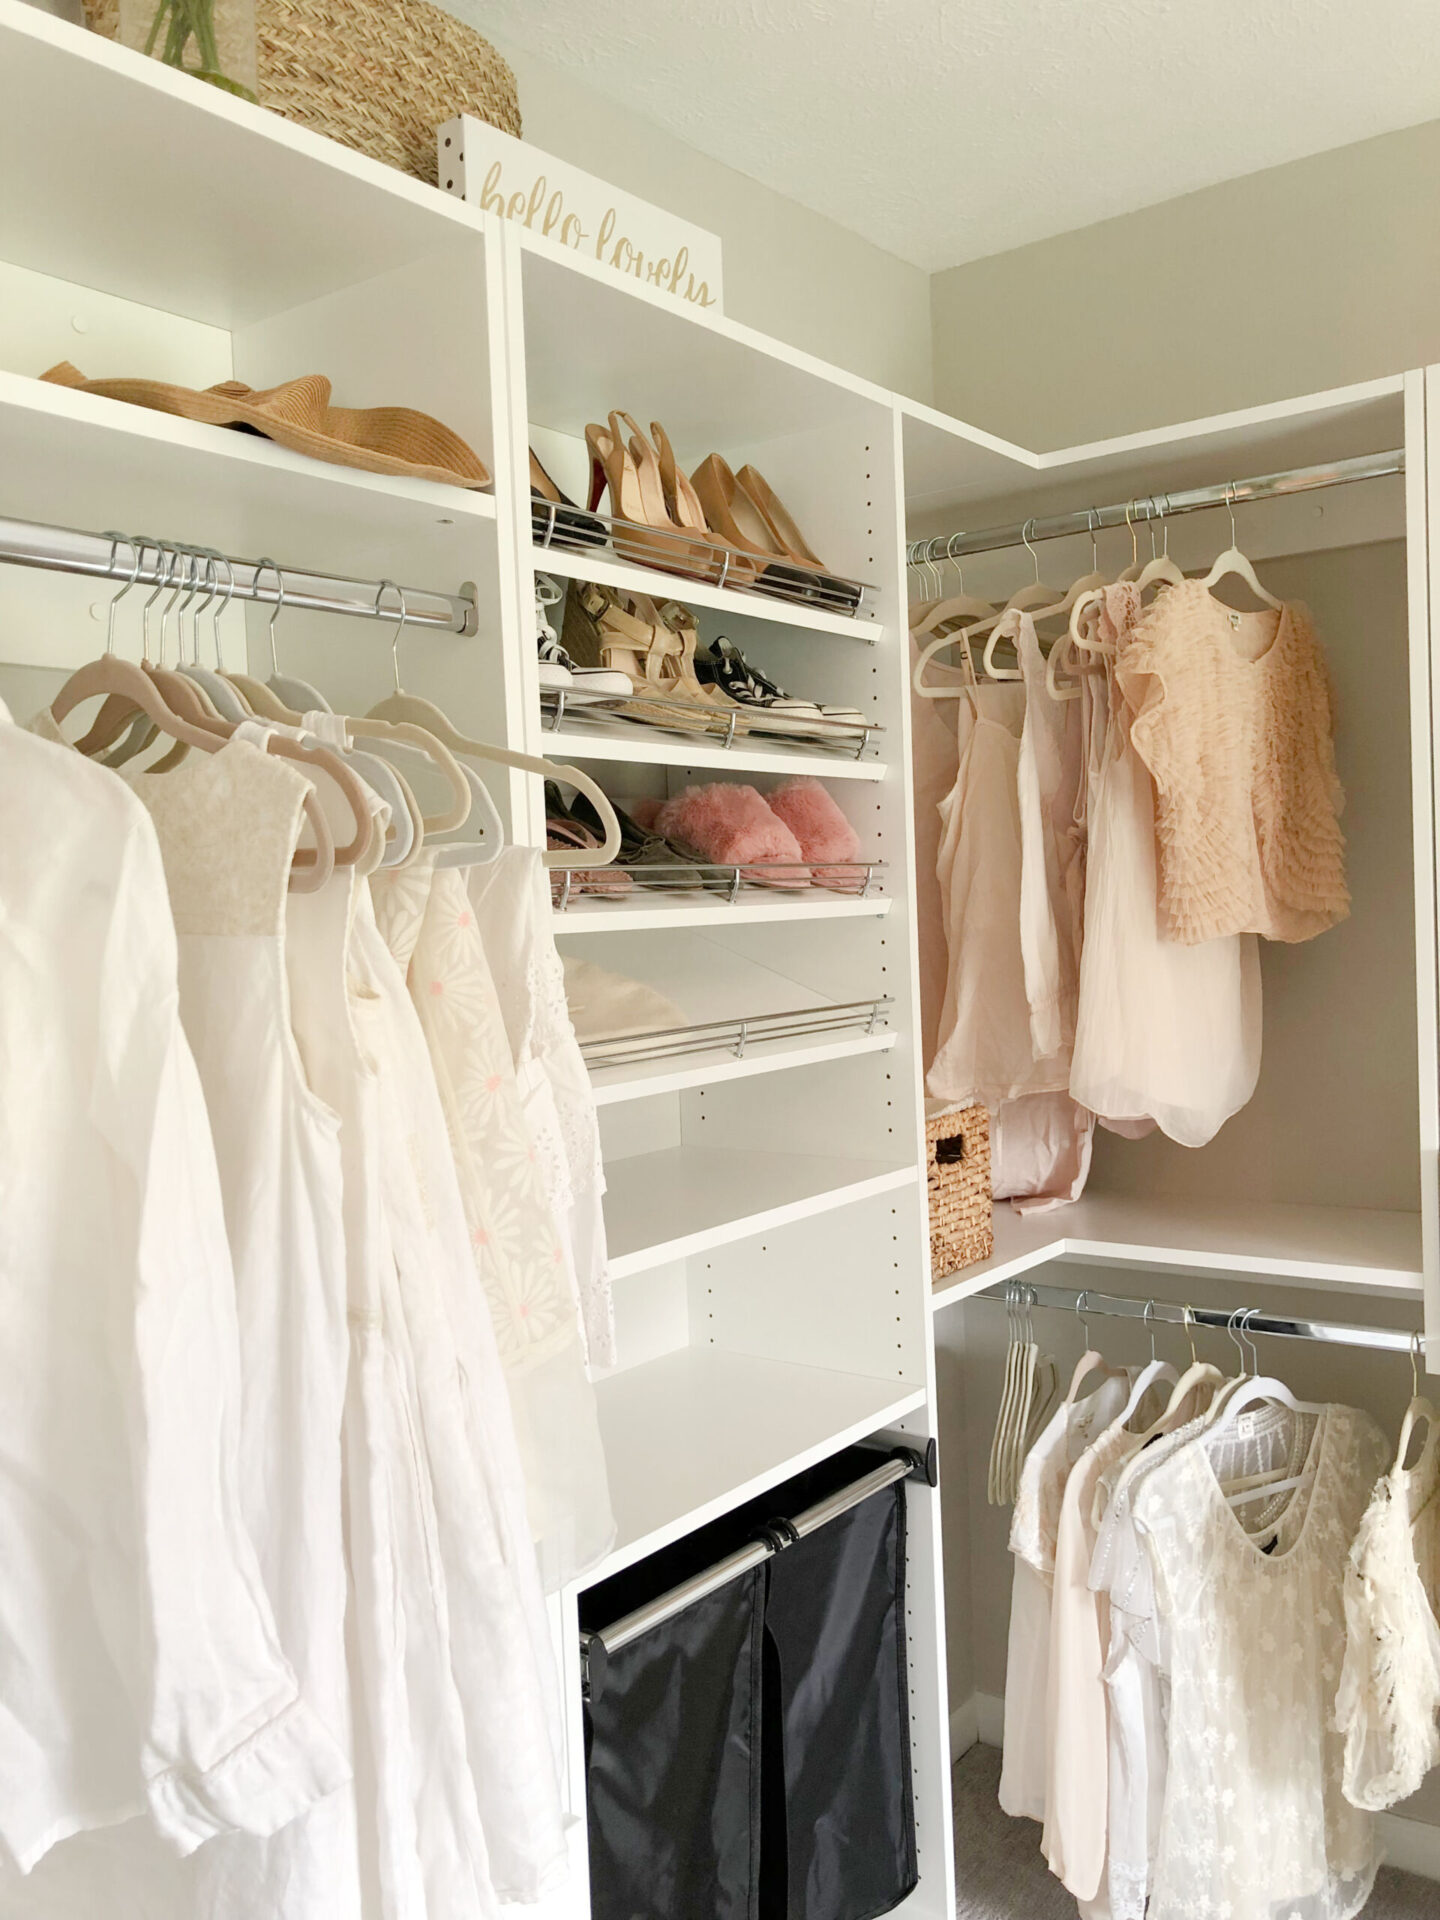 Our DIY closet project has enhanced my everyday! Now my closet feels like a mini boutique - Hello Lovely Studio. #diycloset #customcloset #closetupgrade